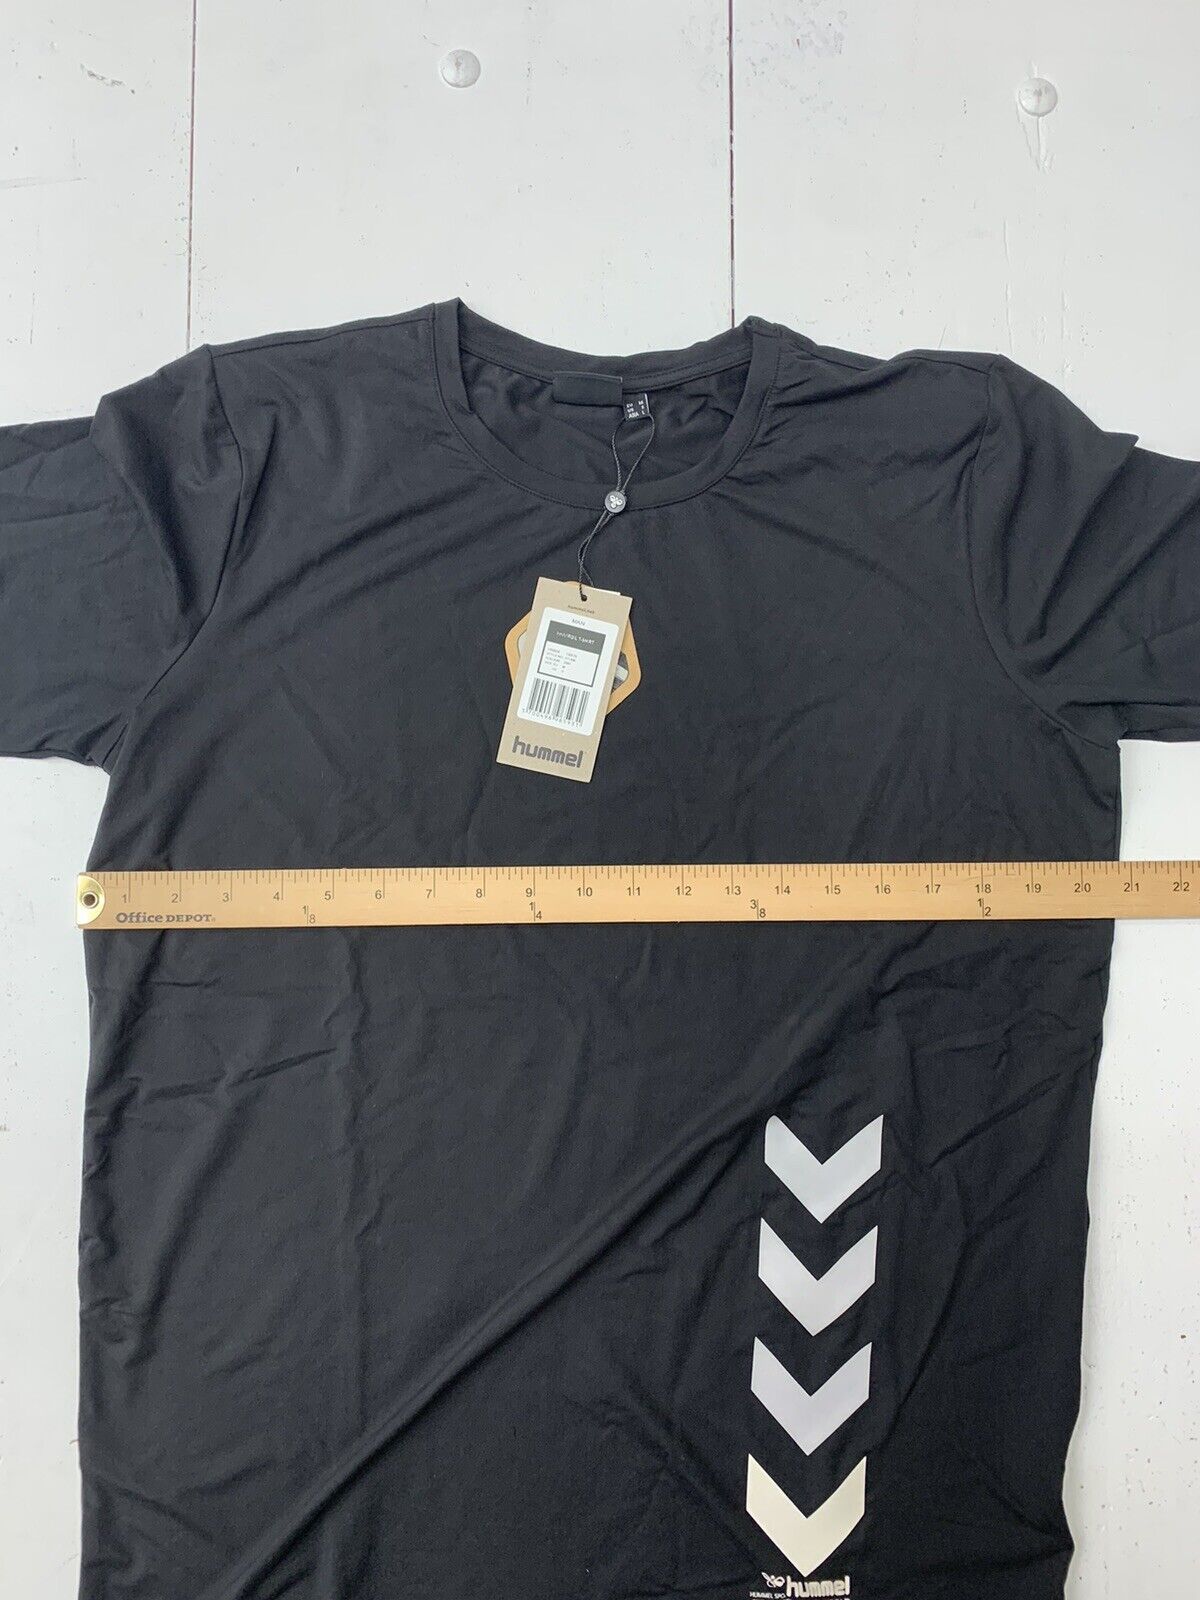 Shirt exchange Virgil Medium Hummel beyond New - Mens T Size Black